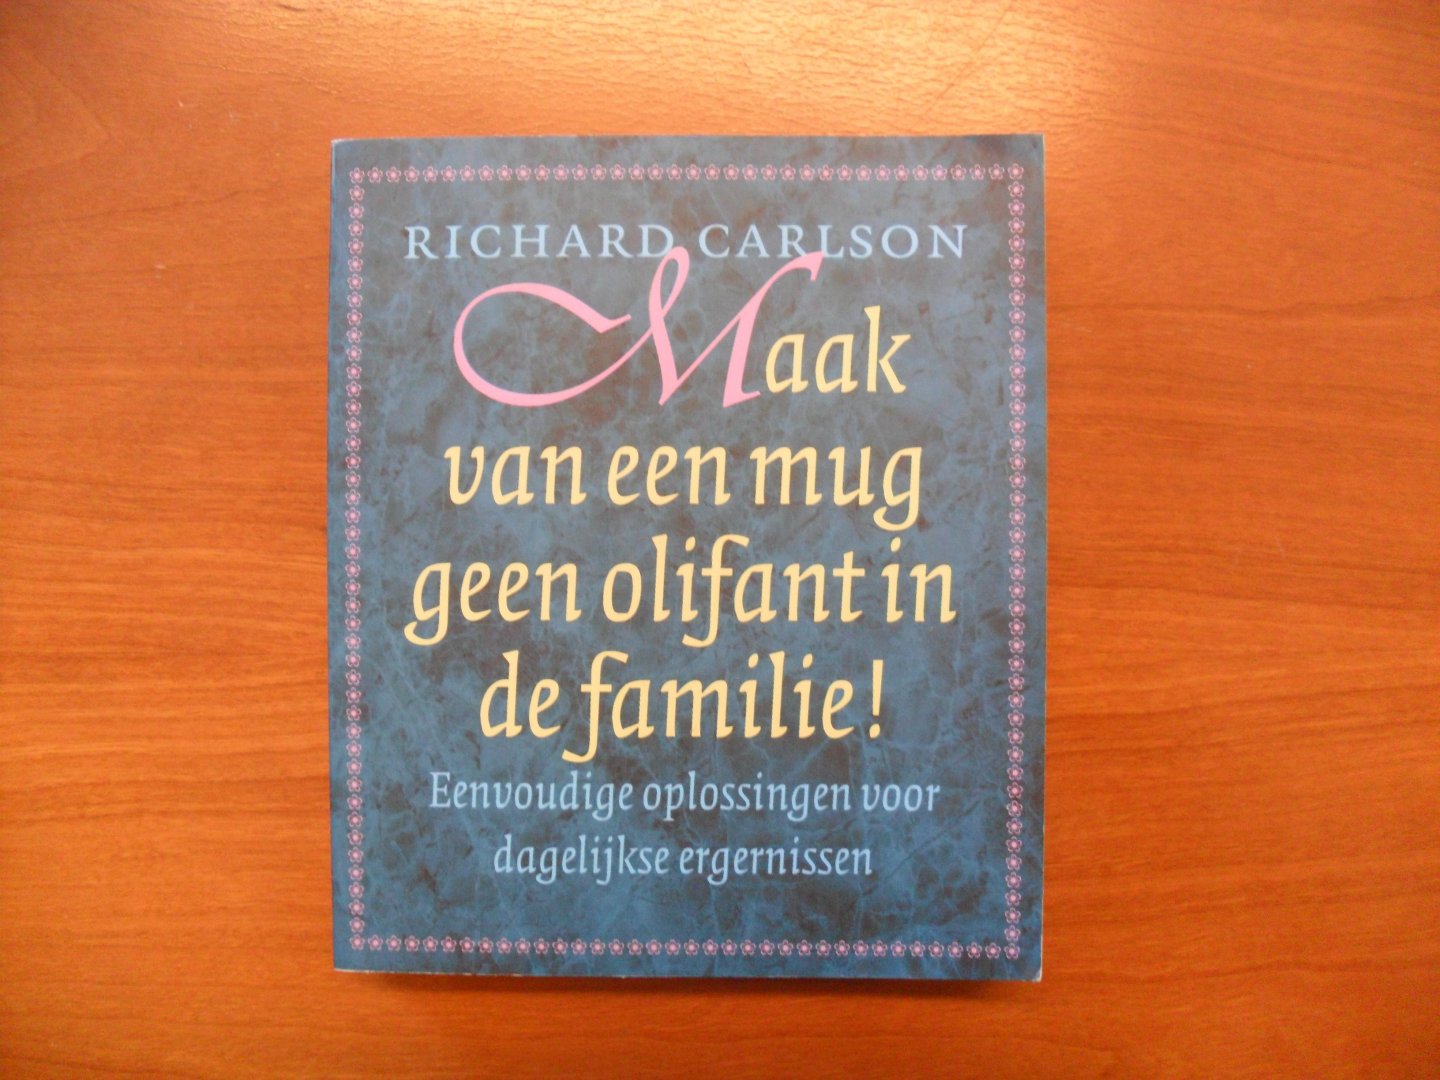 Carlson, Richard - Maak van een mug geen olifant in de familie